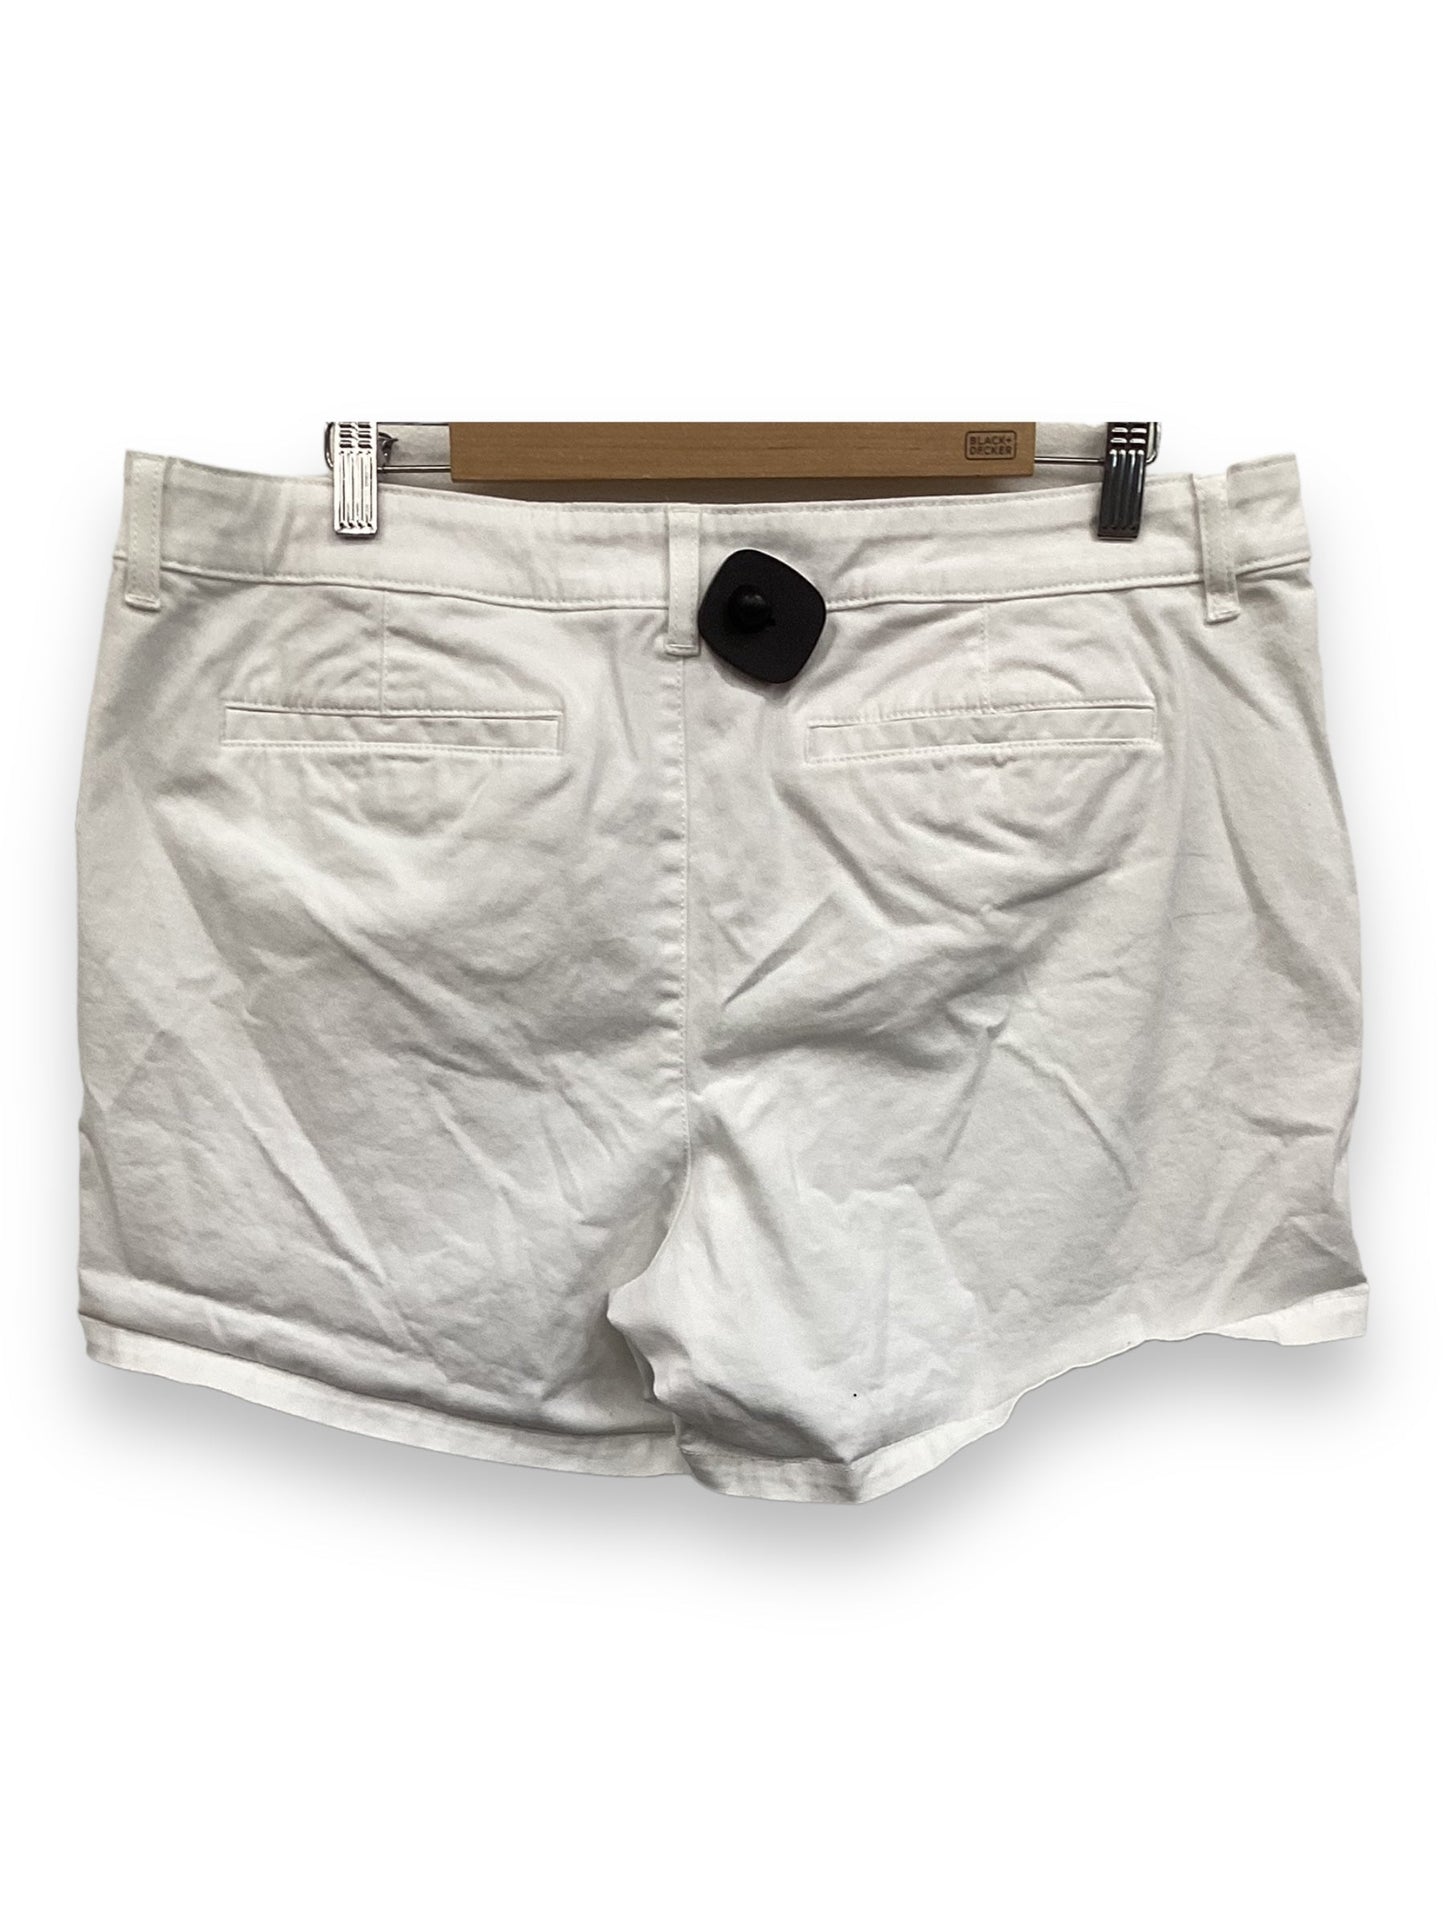 White Shorts Ana, Size 16